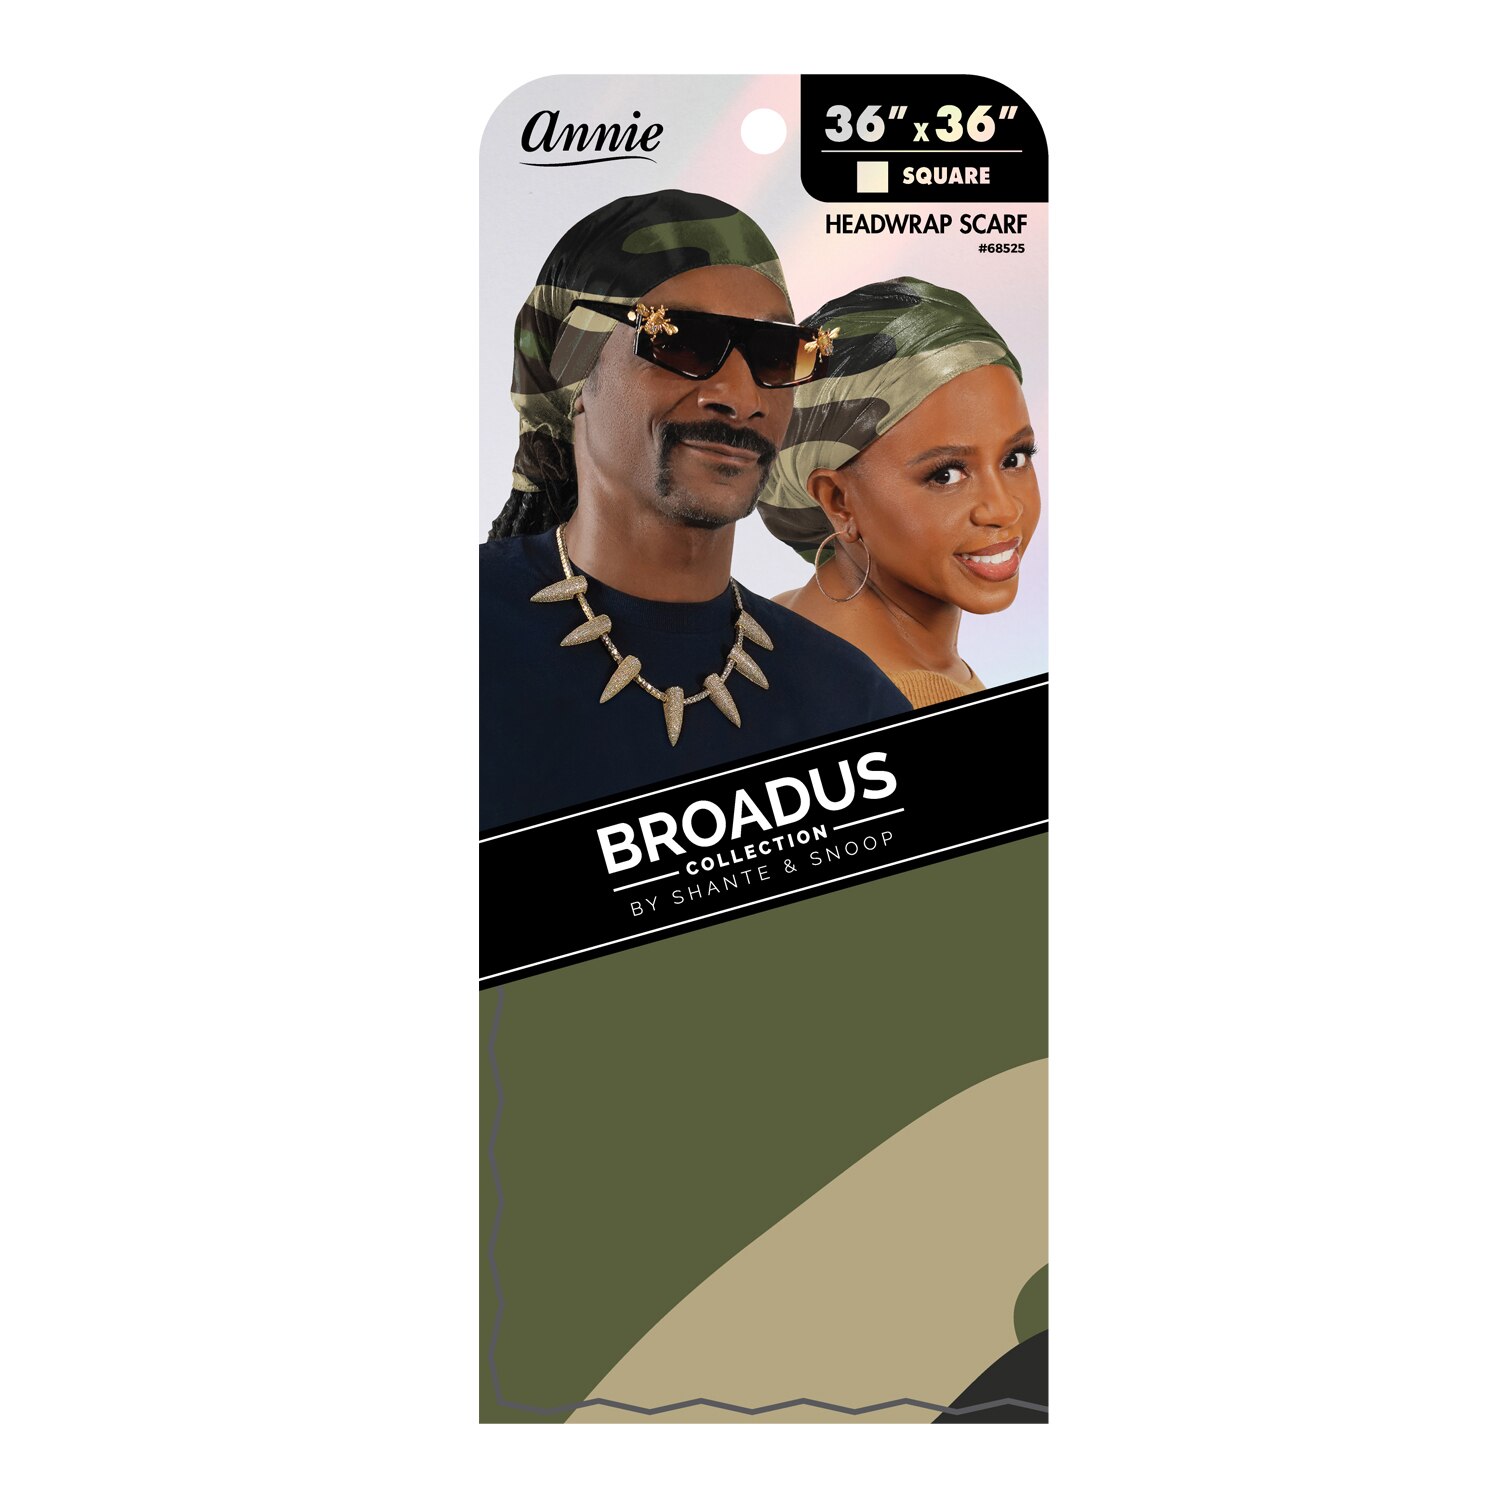 Broadus Collection Headwrap Scarf, Camo